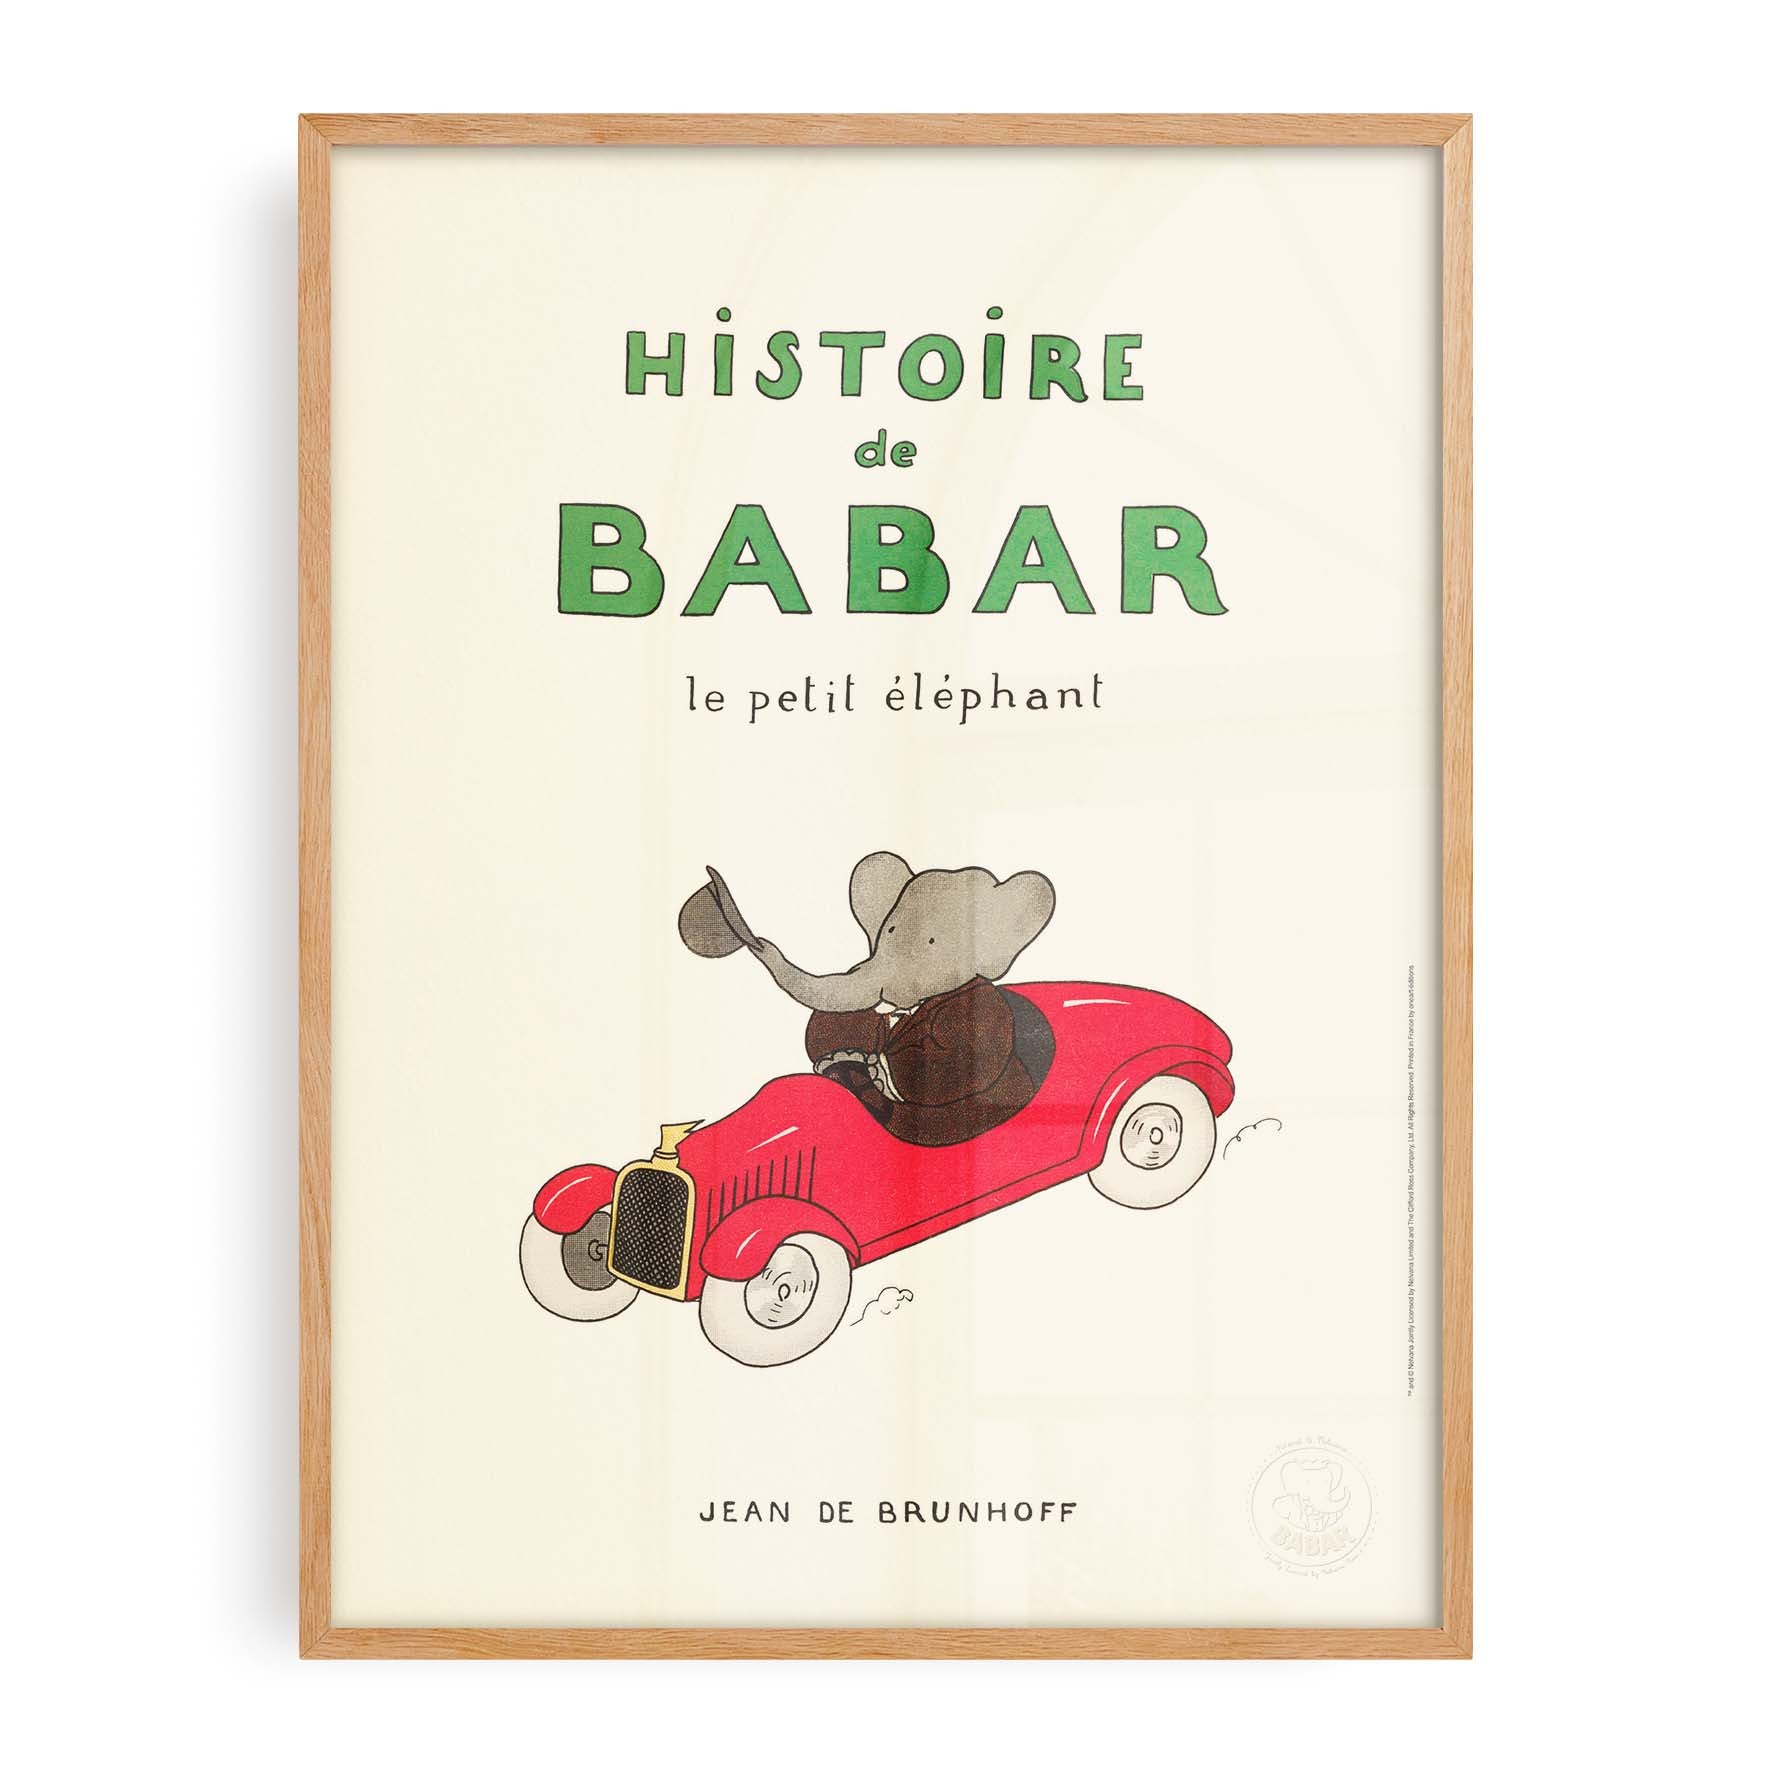 Affiche Histoire de Babar-oneart.fr